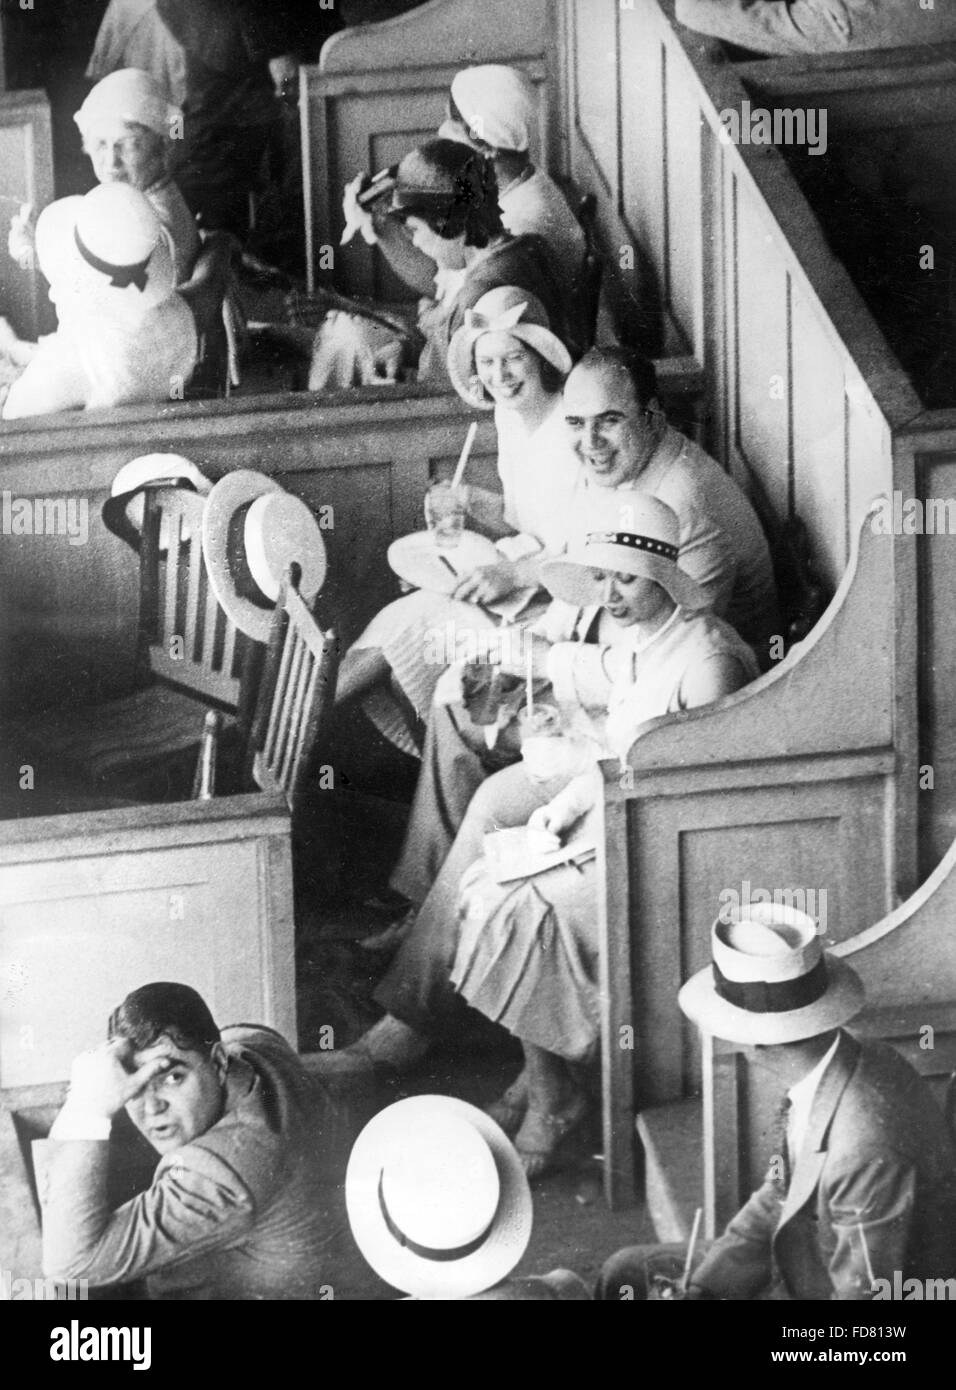 Al Capone on the racecourse Stock Photo